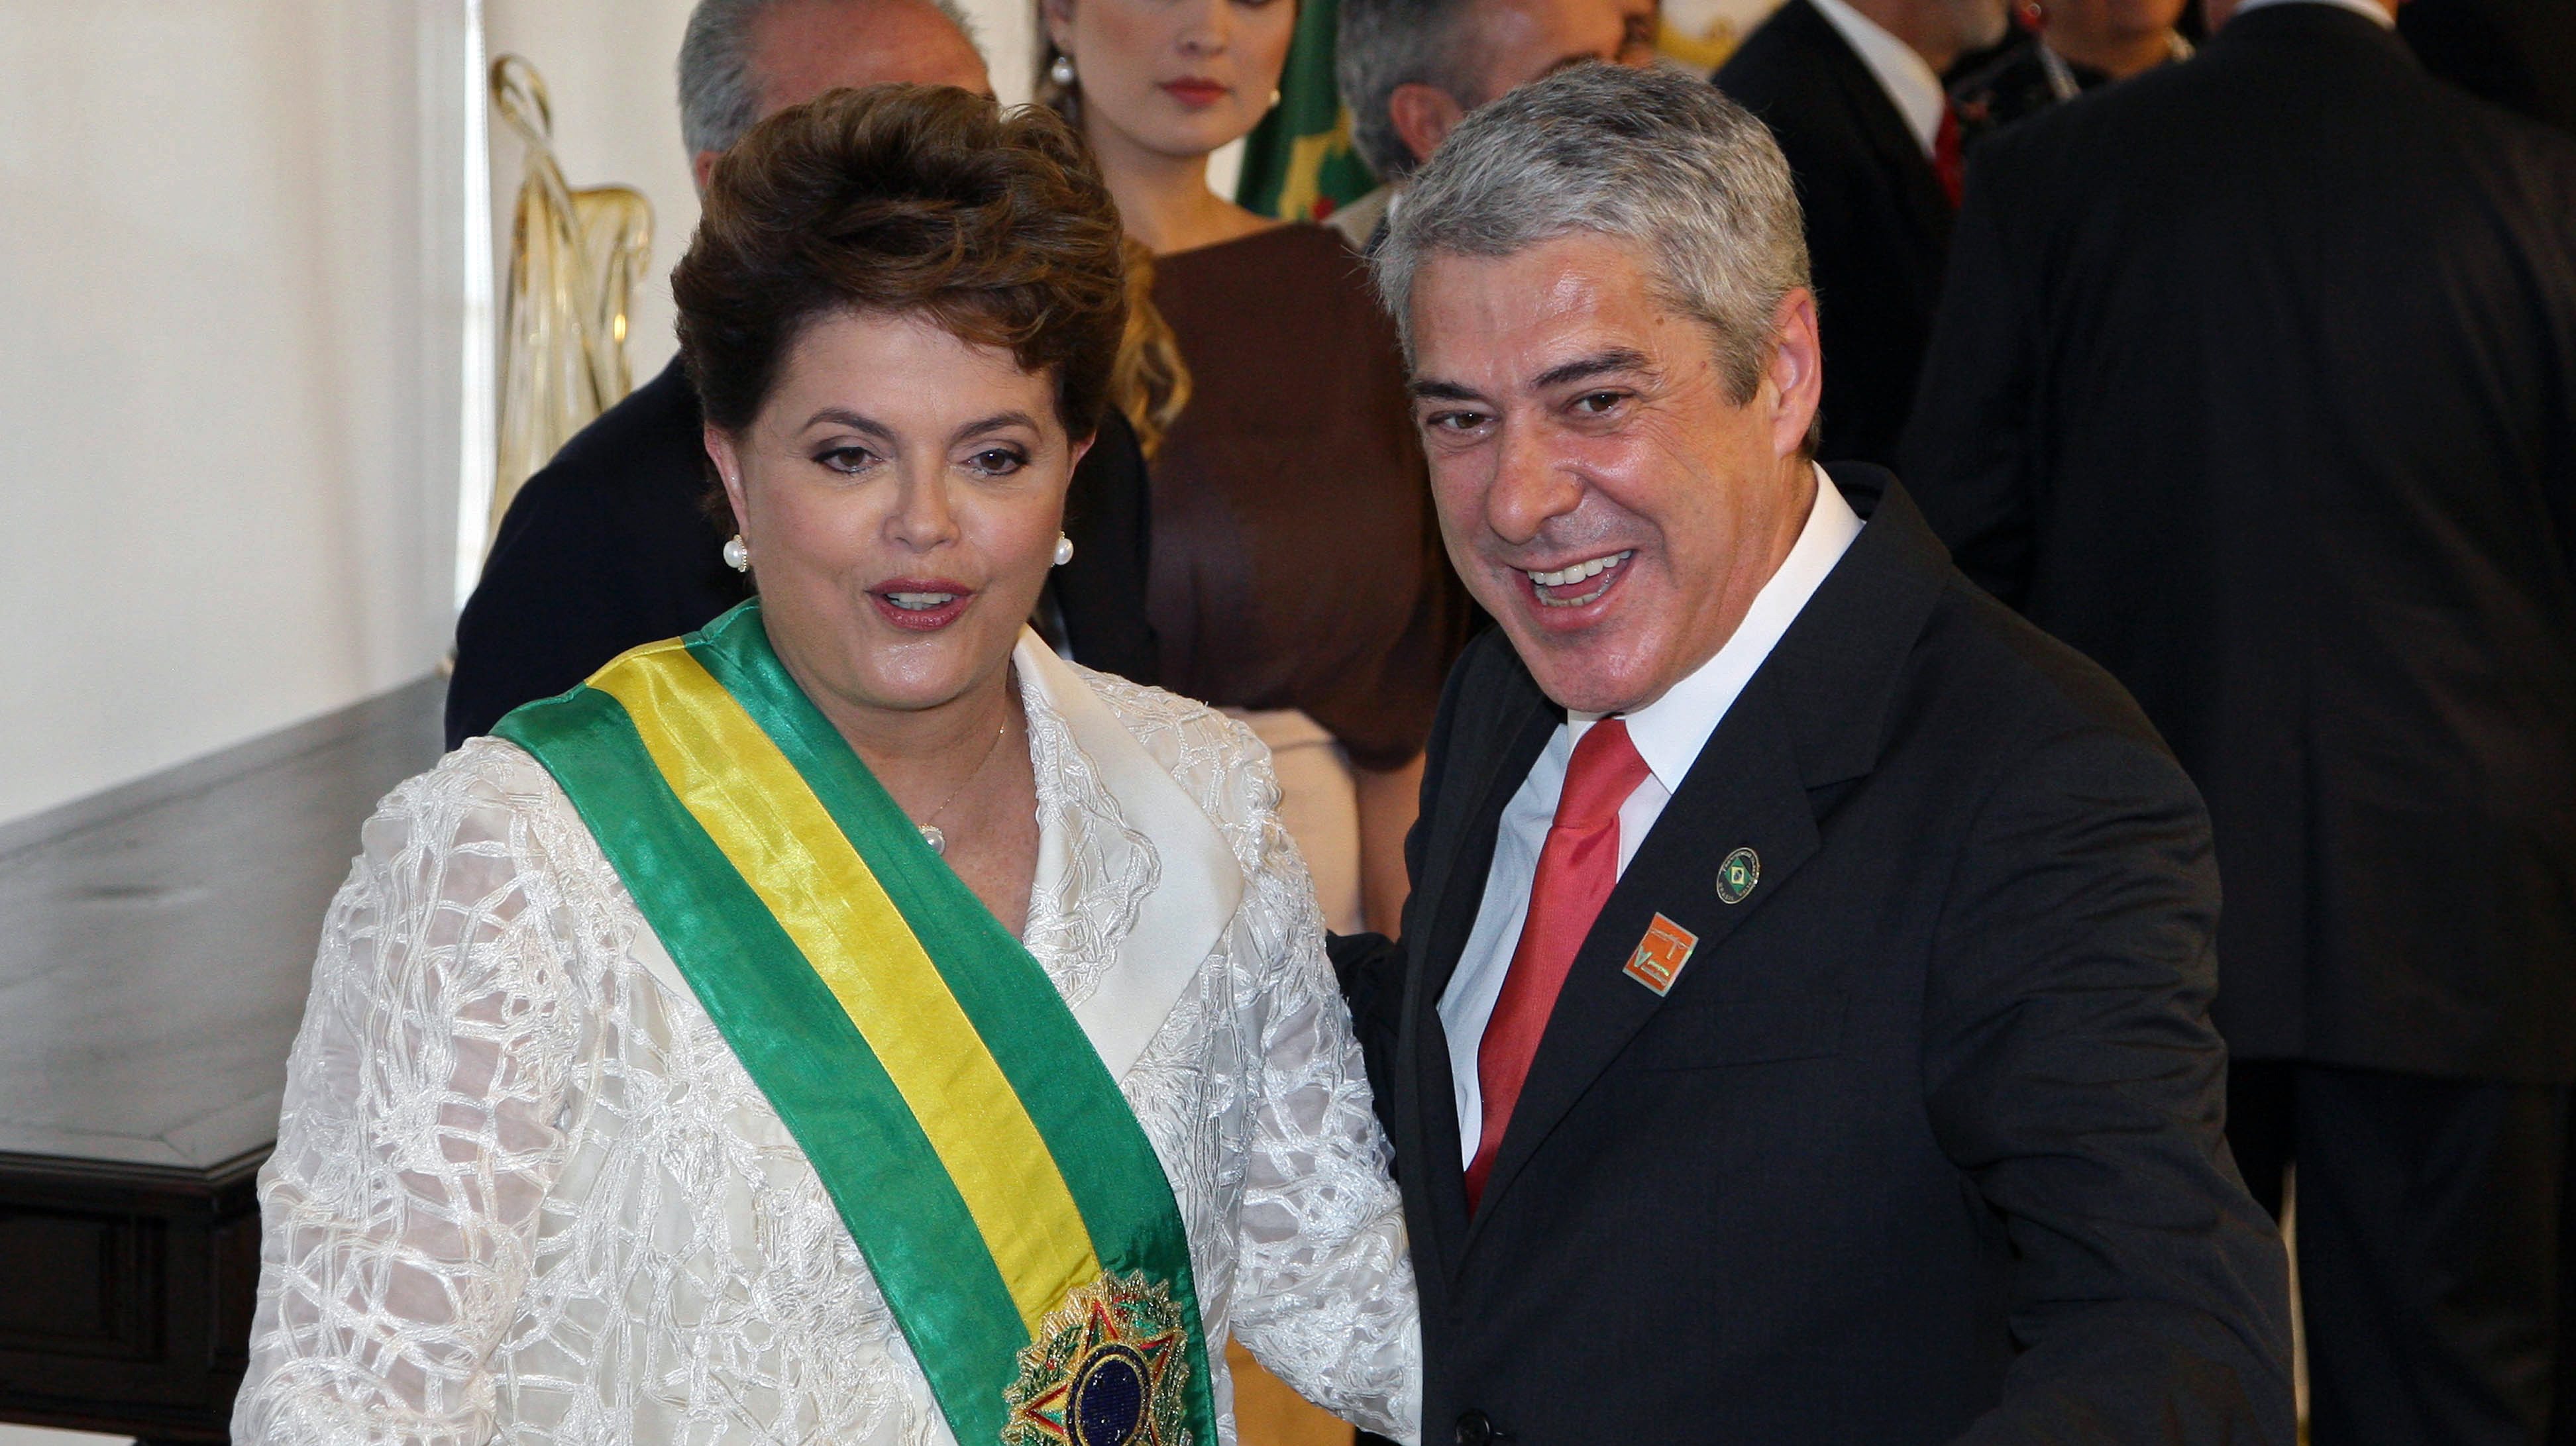 Newly sworn in Brazilian President Dilma